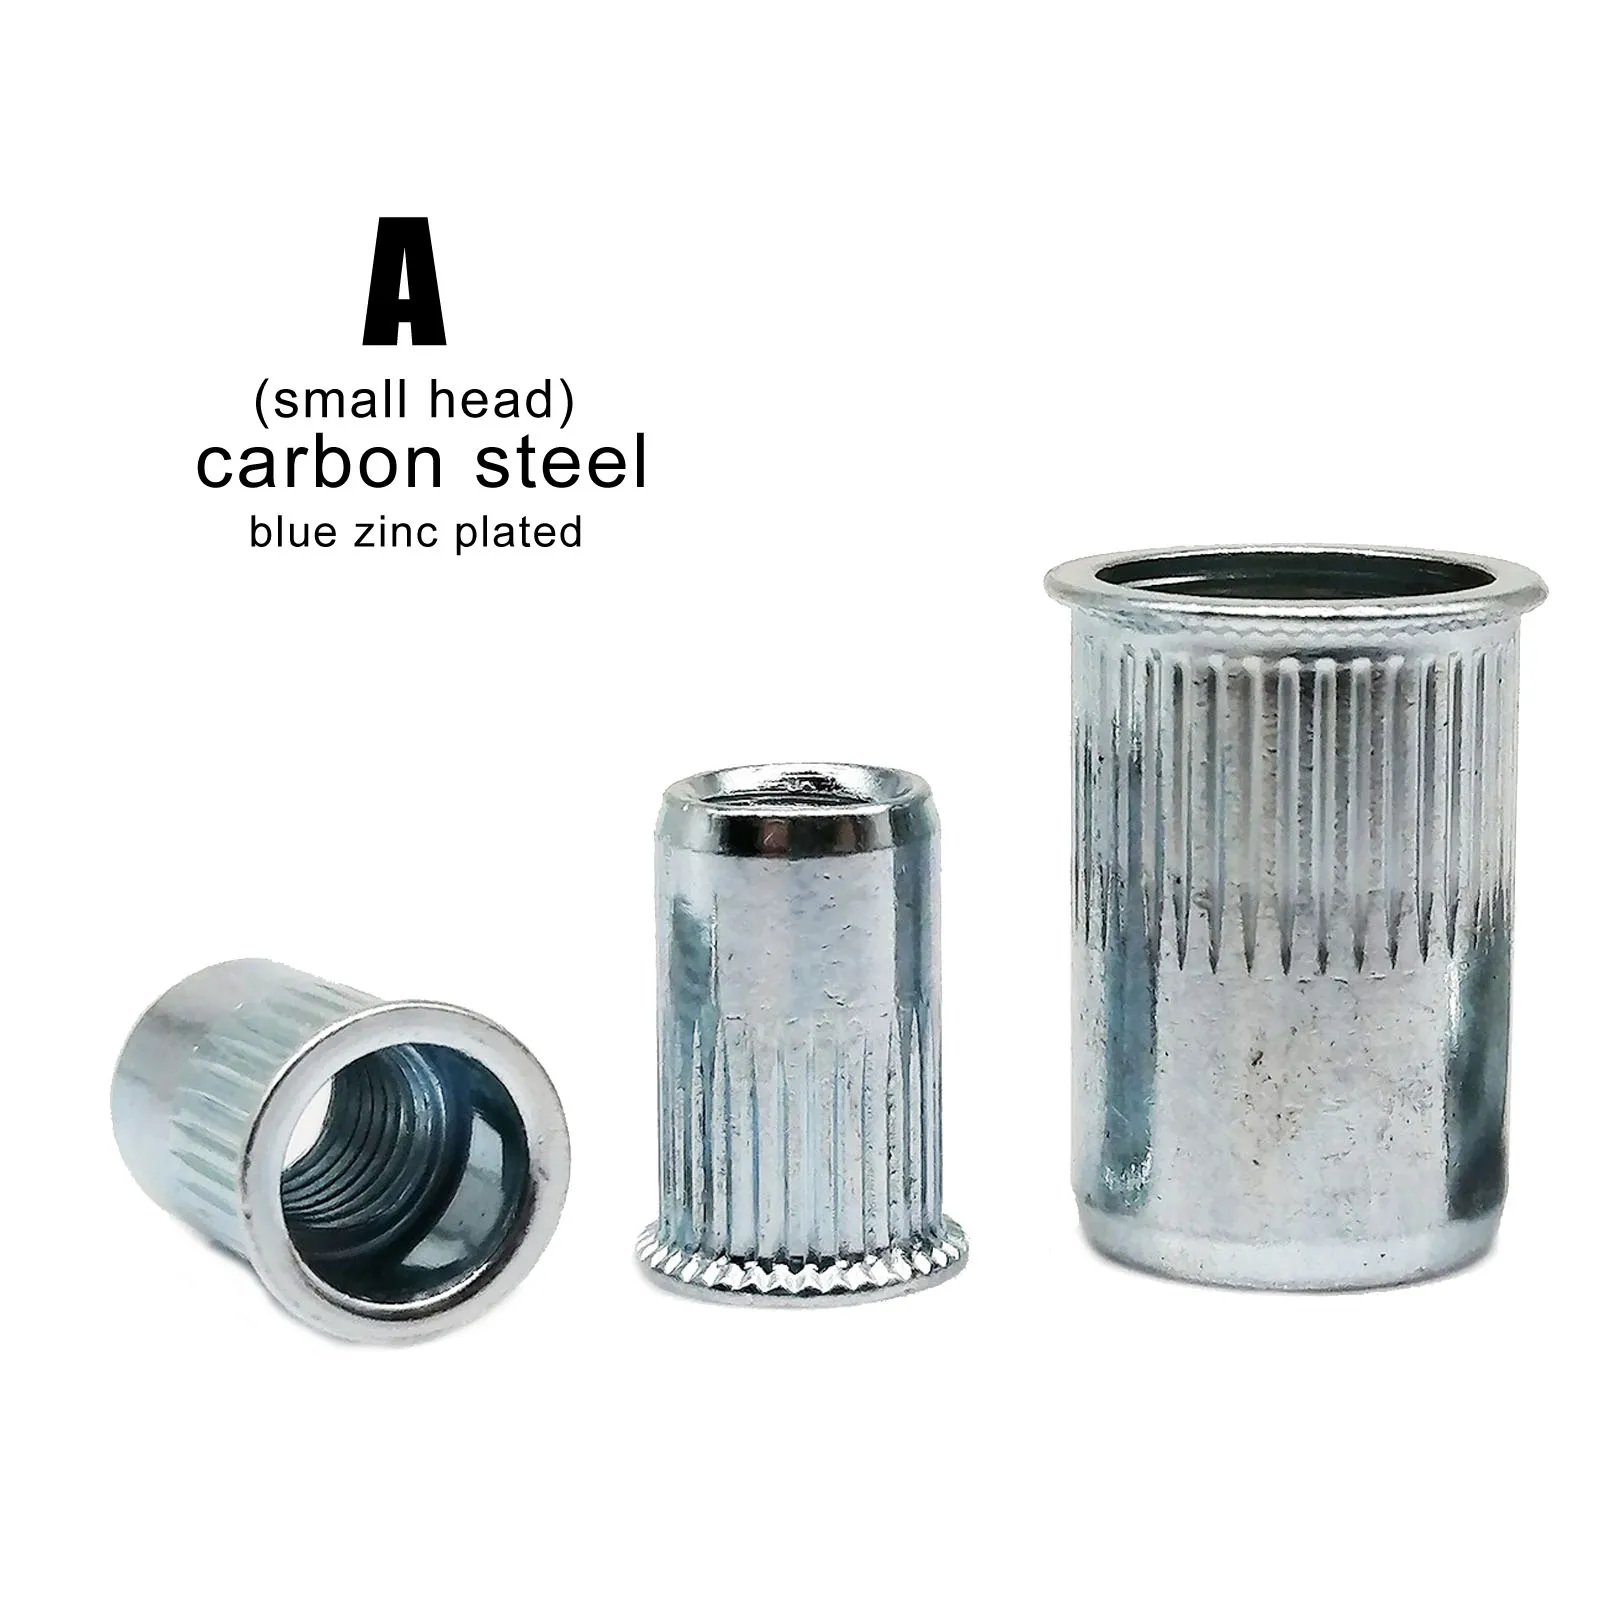 A carbon steel